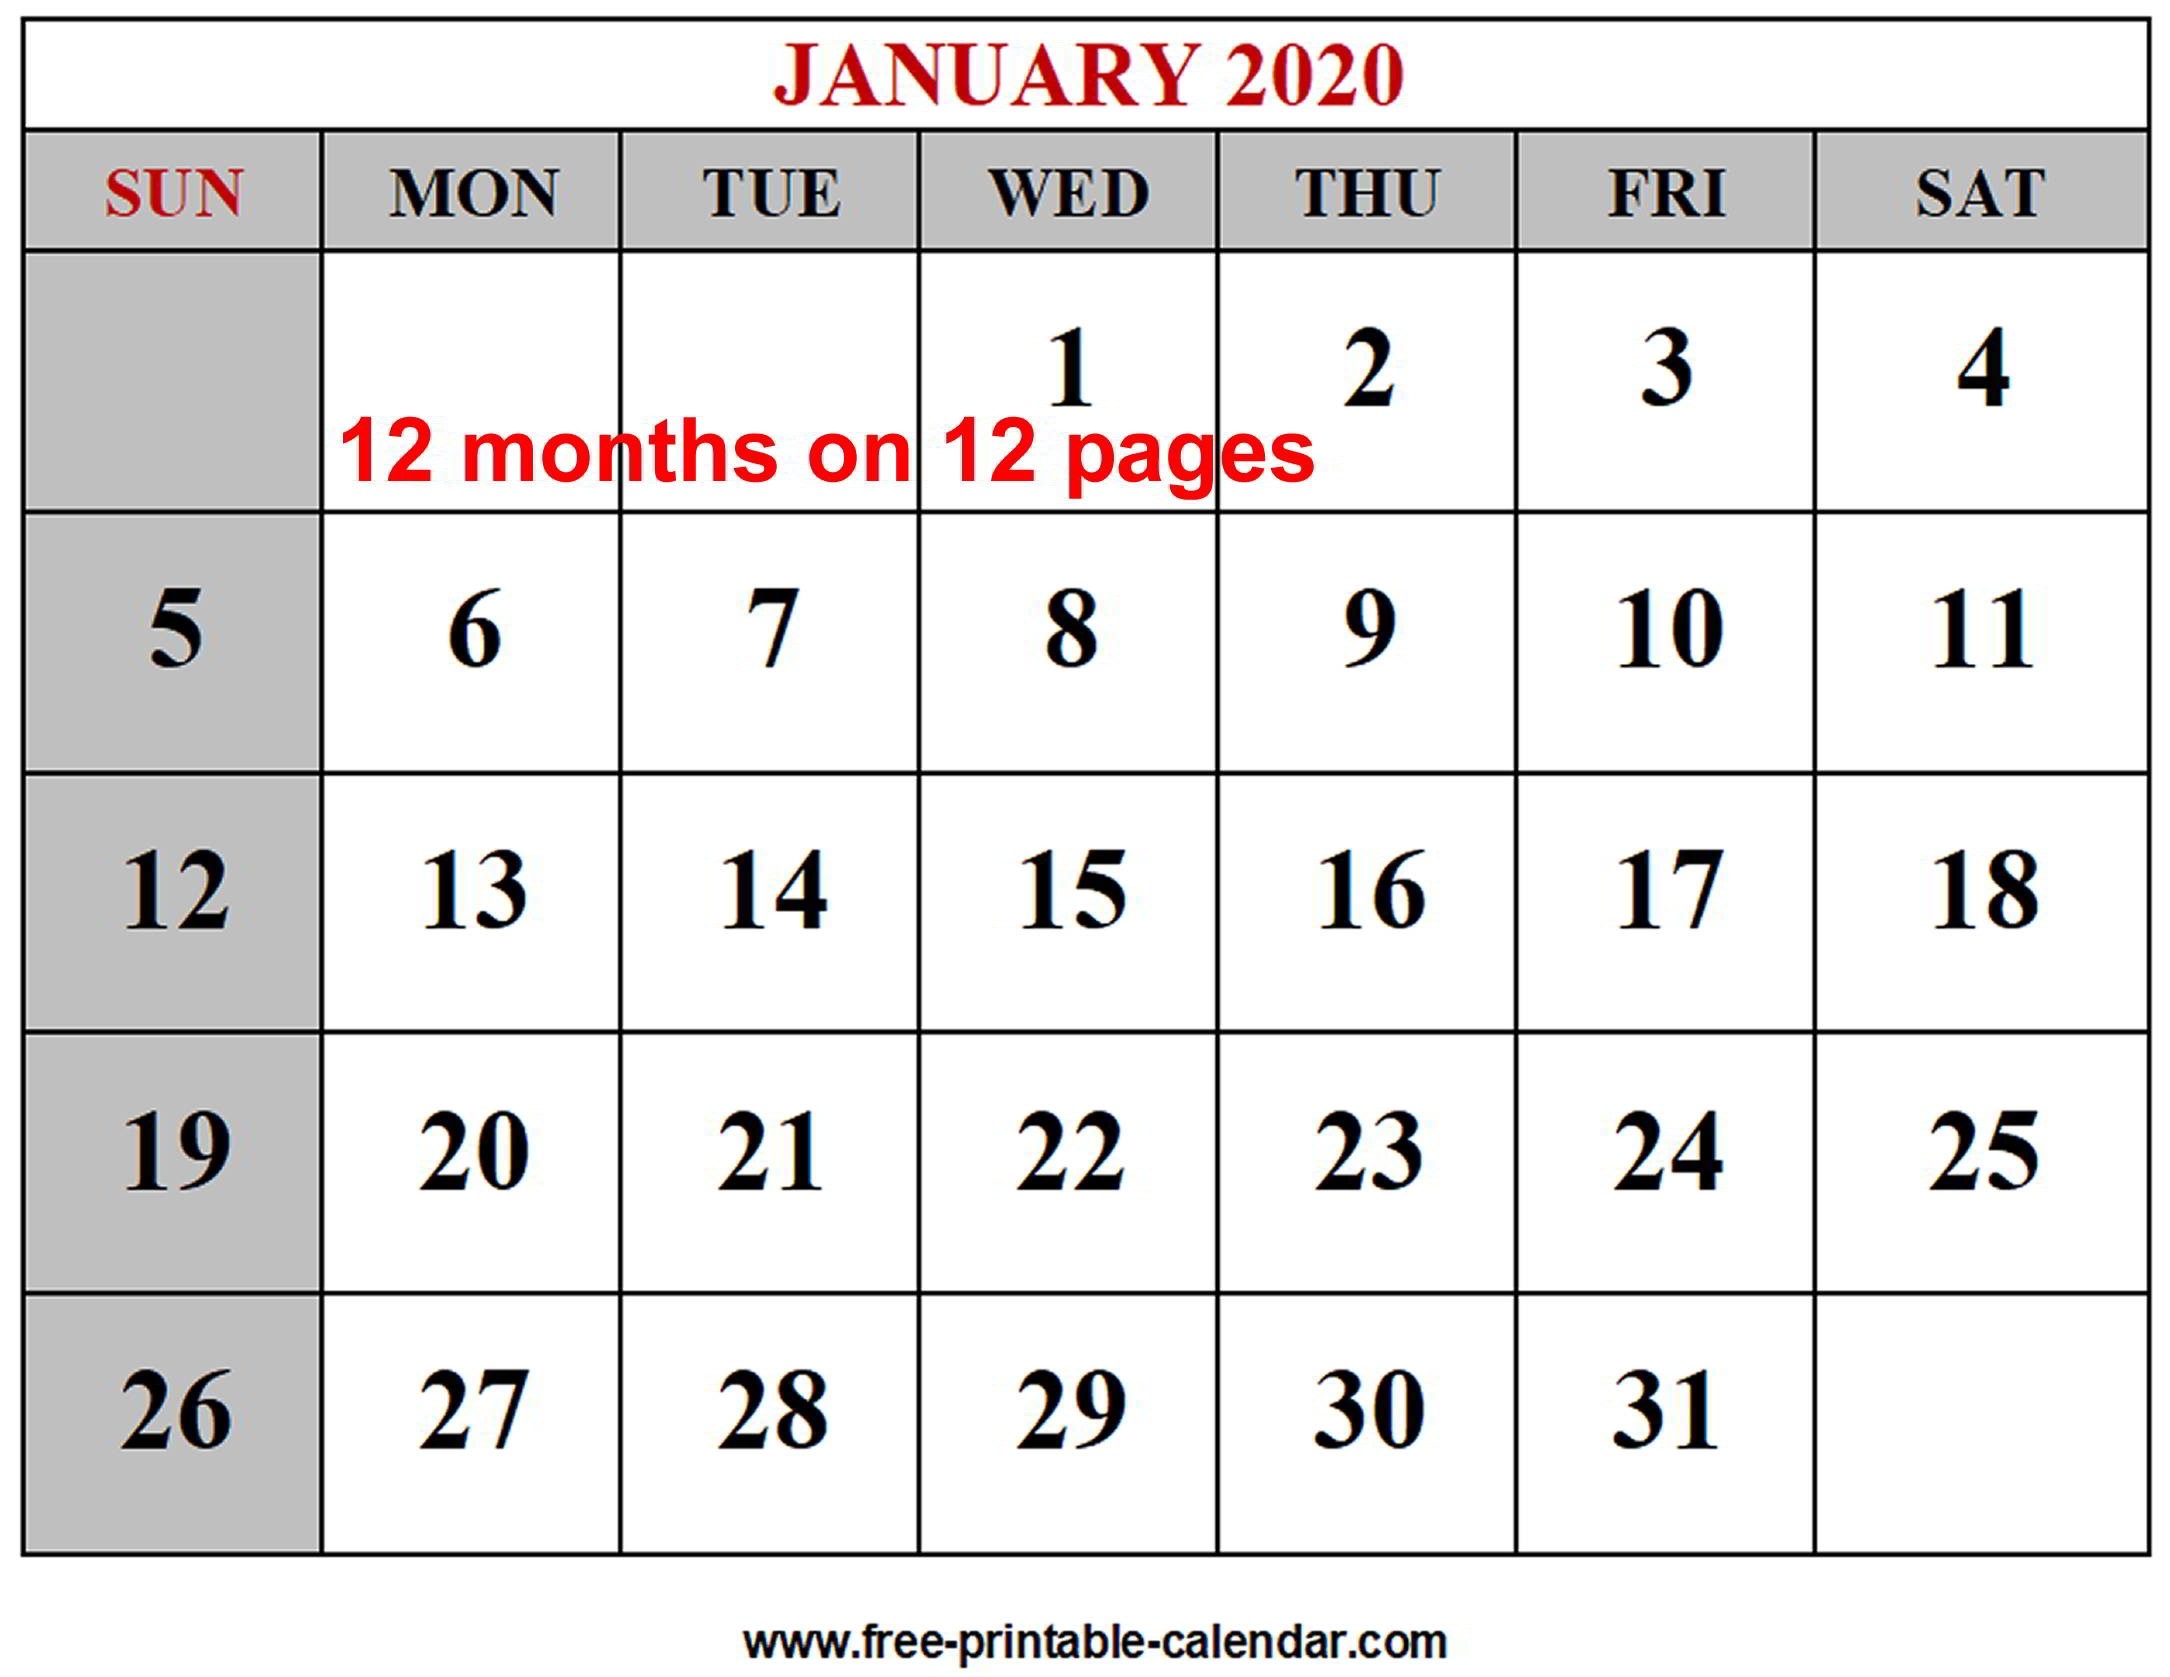 Year 2020 Calendar Templates - Free-Printable-Calendar  Calendar Template 2020 Printable Free